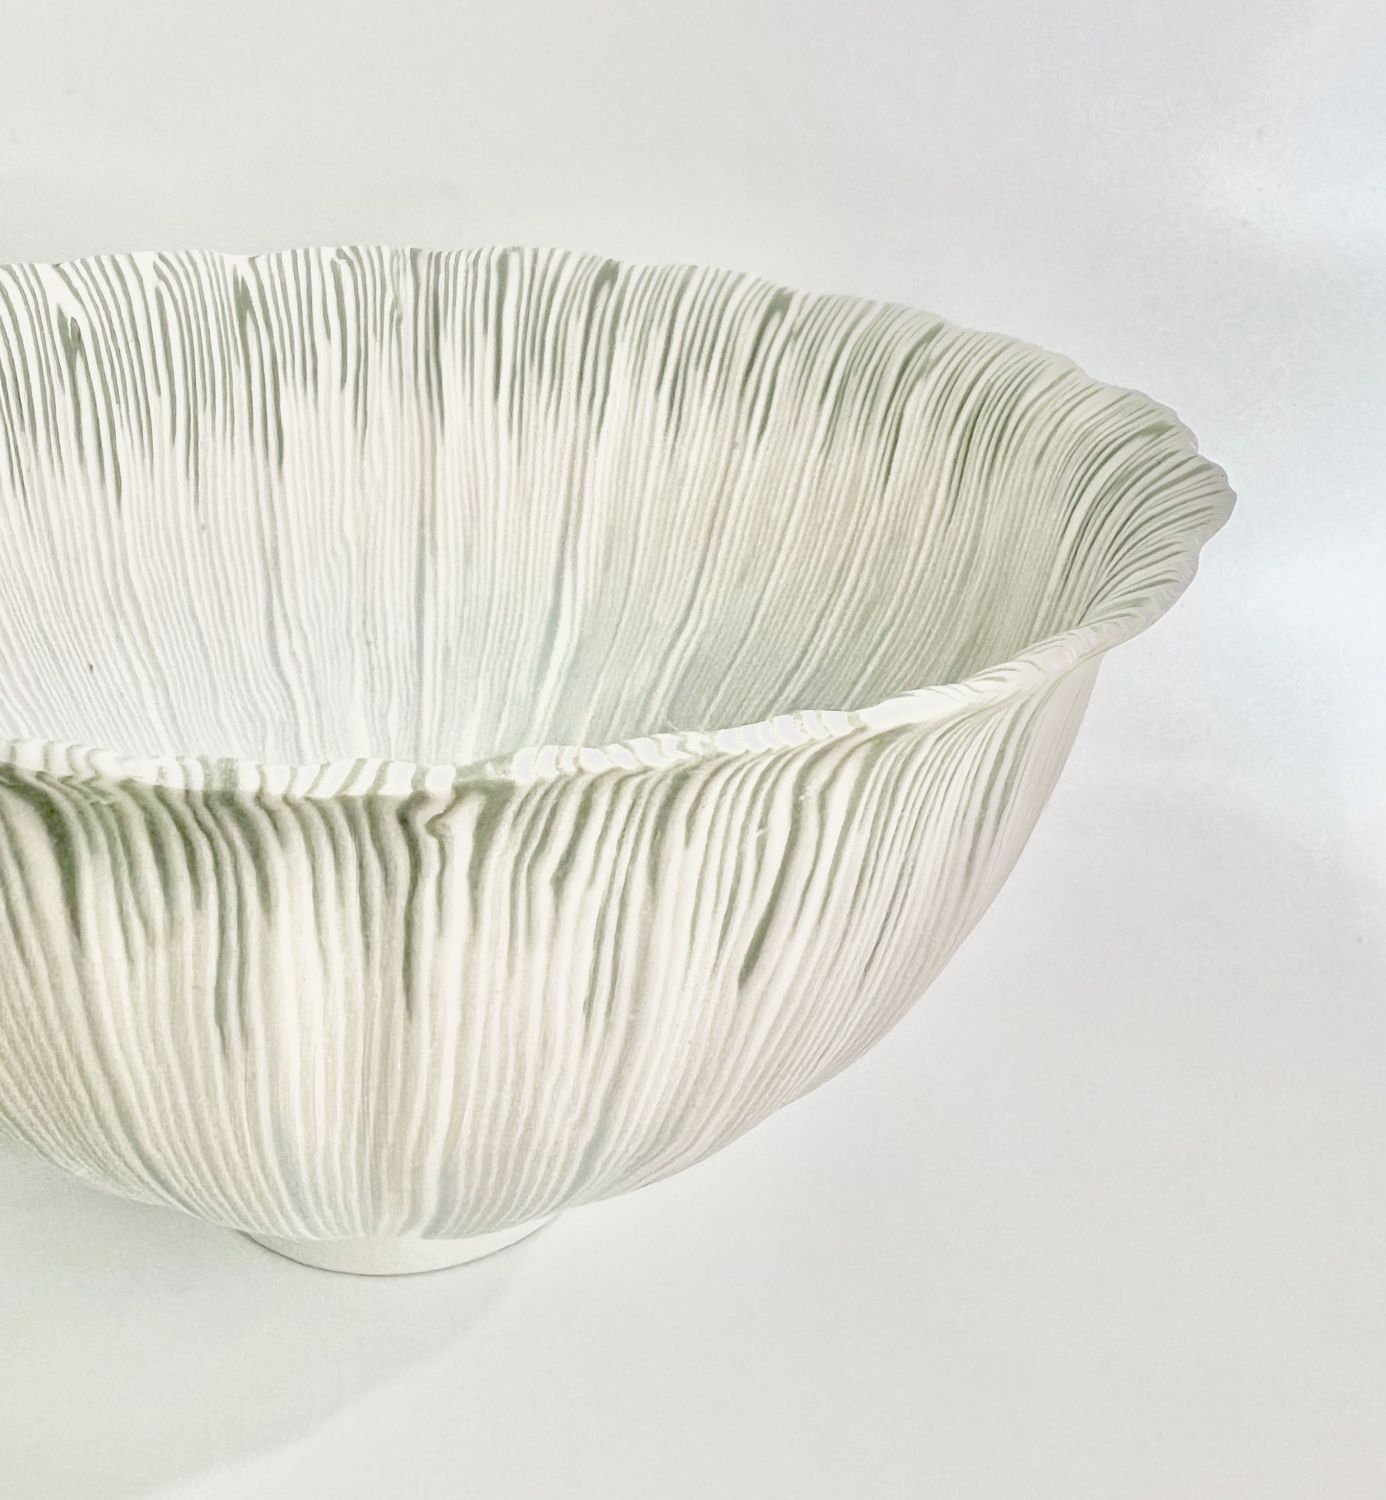 Eiko Maeda: Green and White Bowl Product Image 2 of 3